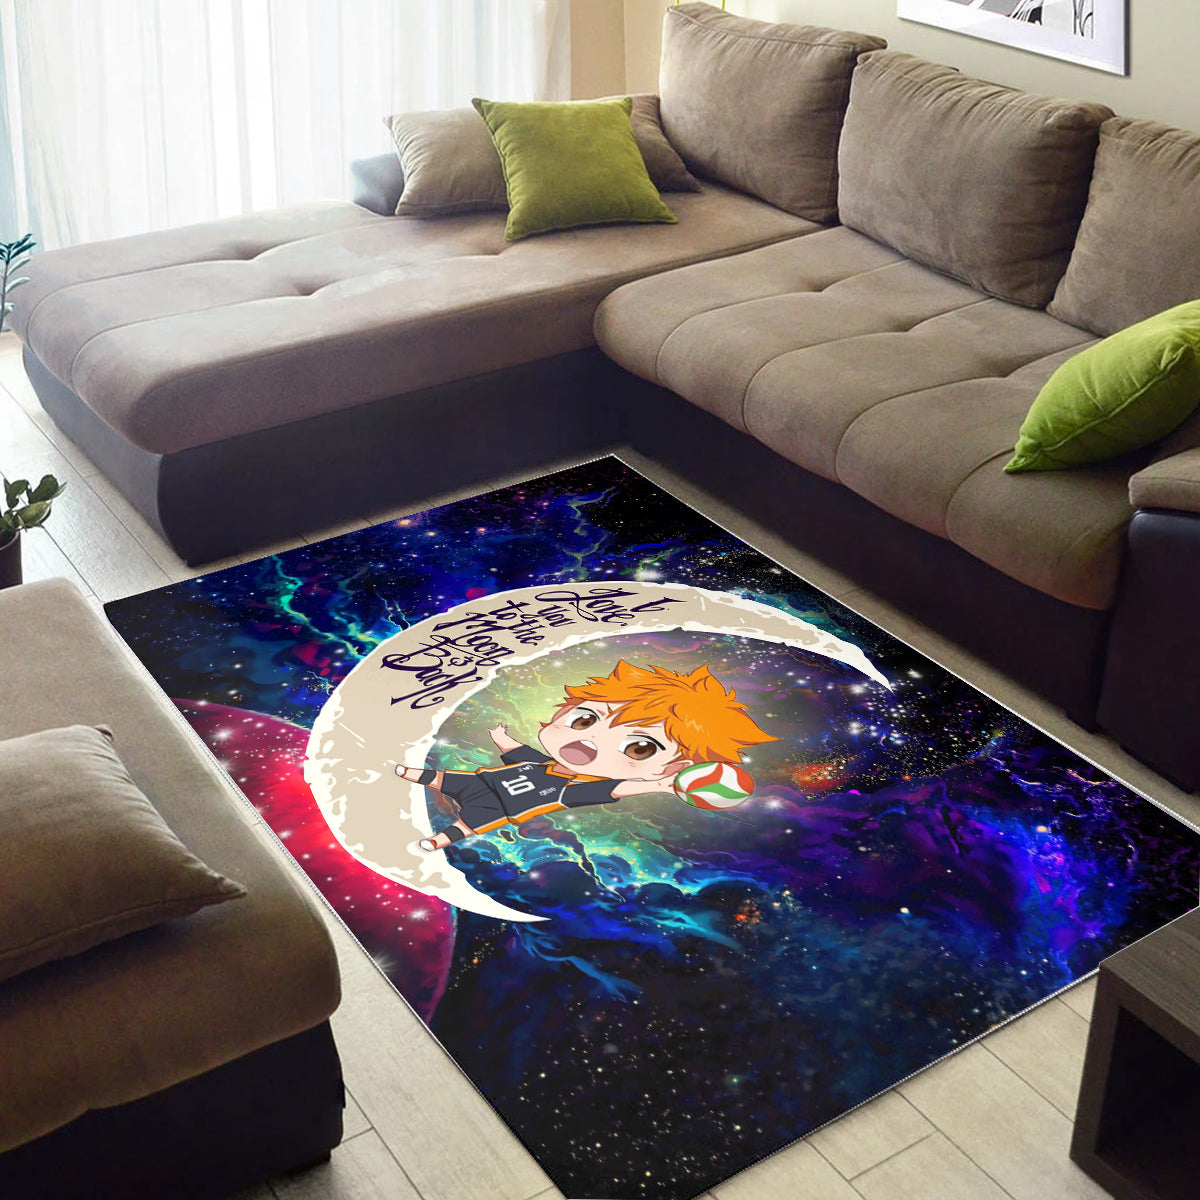 Hinata Haikyuu Love You To The Moon Galaxy Carpet Rug Home Room Decor